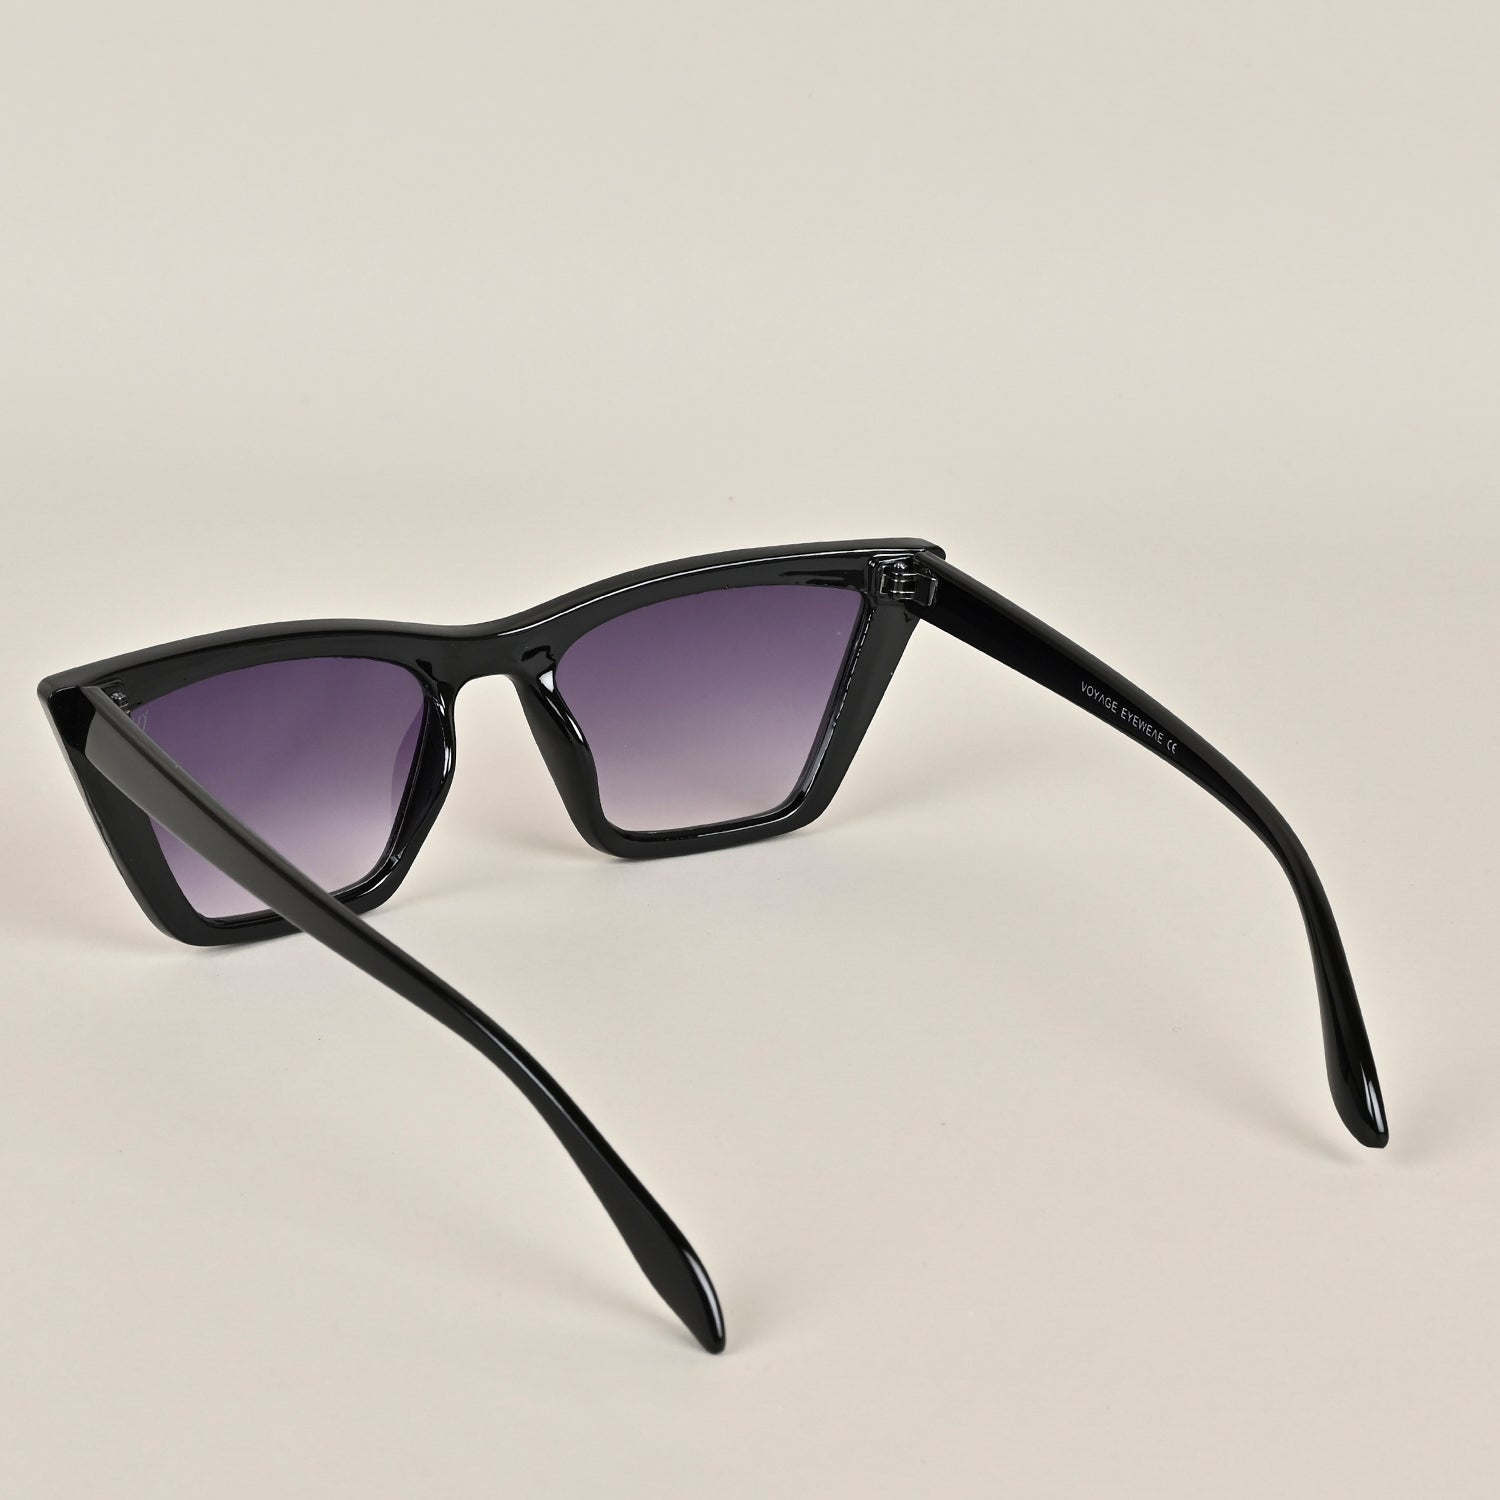 Voyage Violet-Black Cateye Sunglasses MG3298